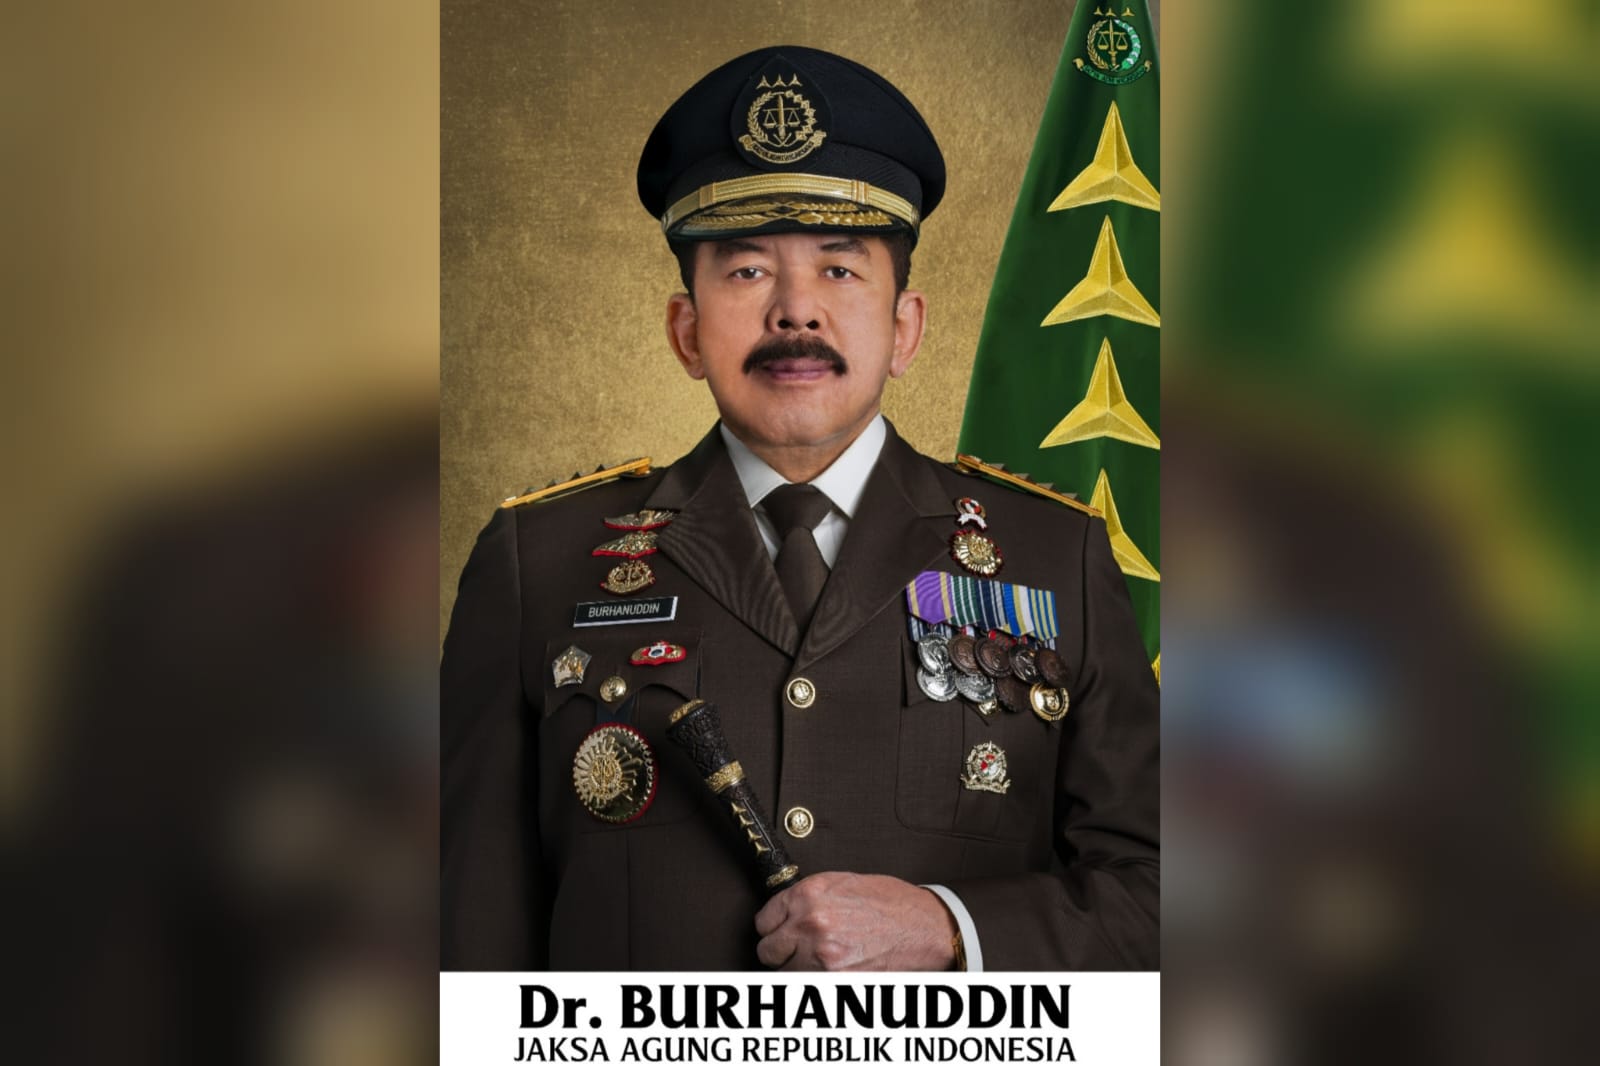 ST Burhanuddin: Membangun Penegakan Hukum Humanis Melalui Spirit Pancasila